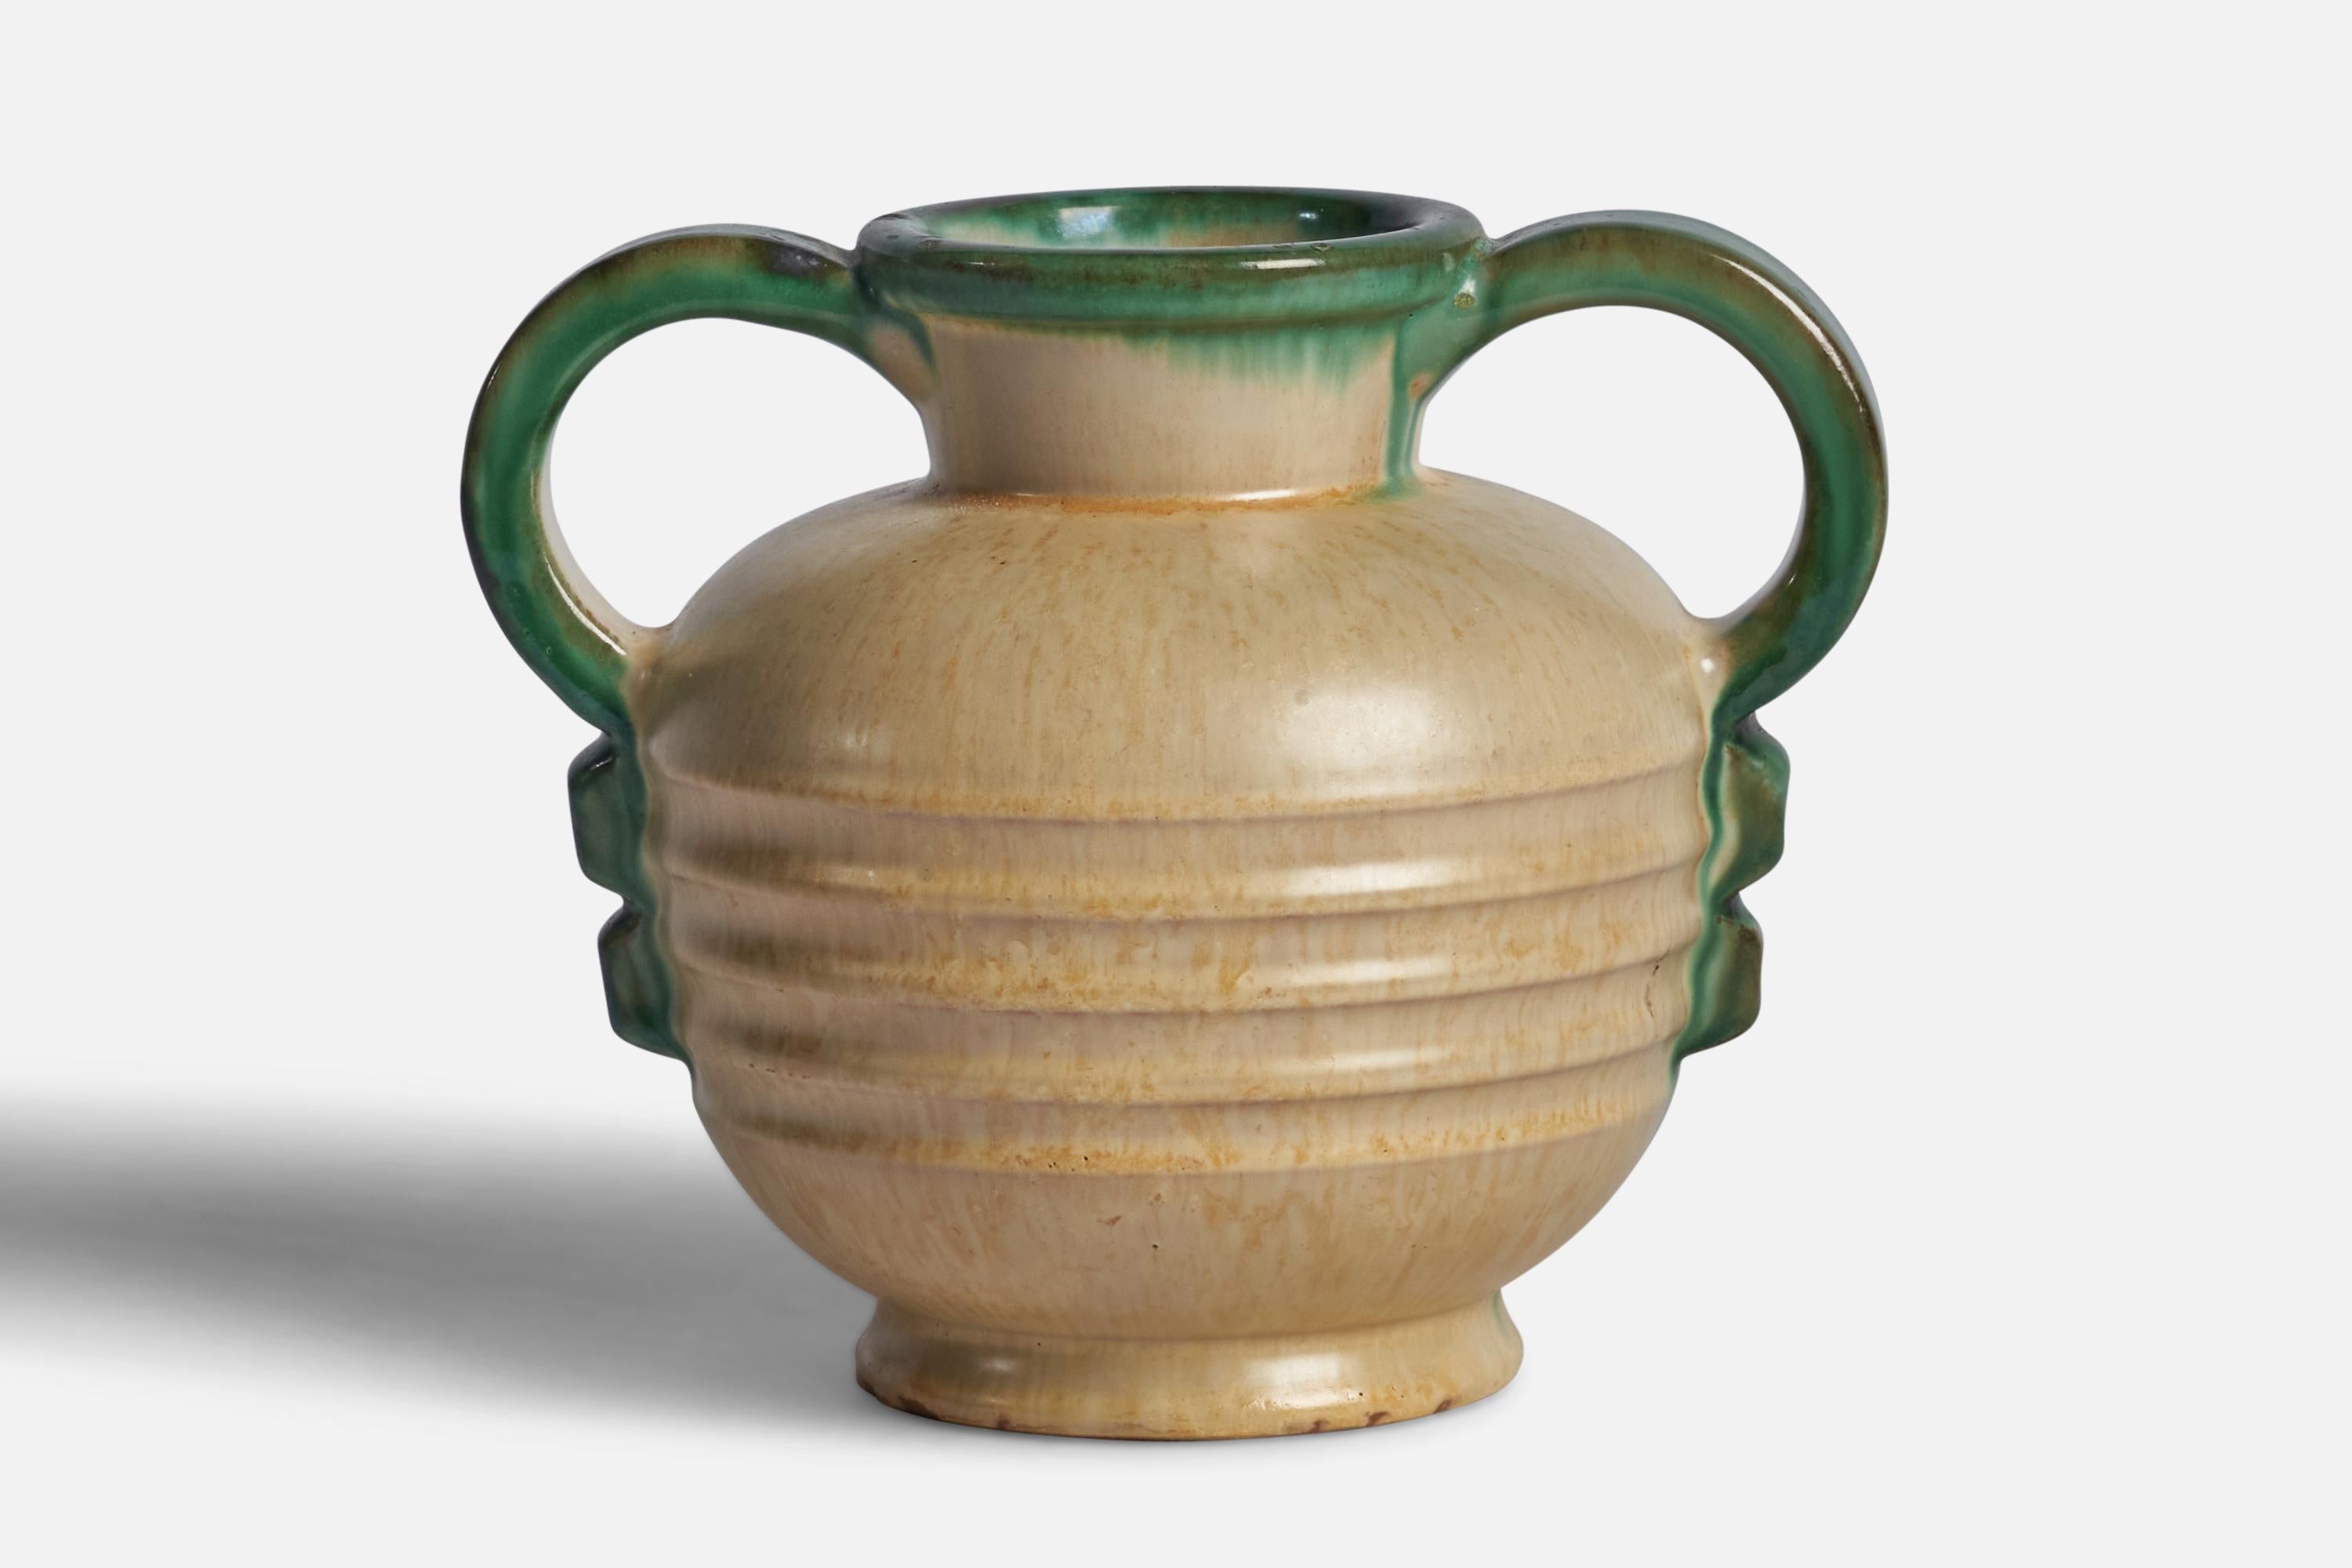 A green and beige-glazed earthenware vase designed by Christer Heijl and produced by Töreboda Keramik, Sweden, 1930s.